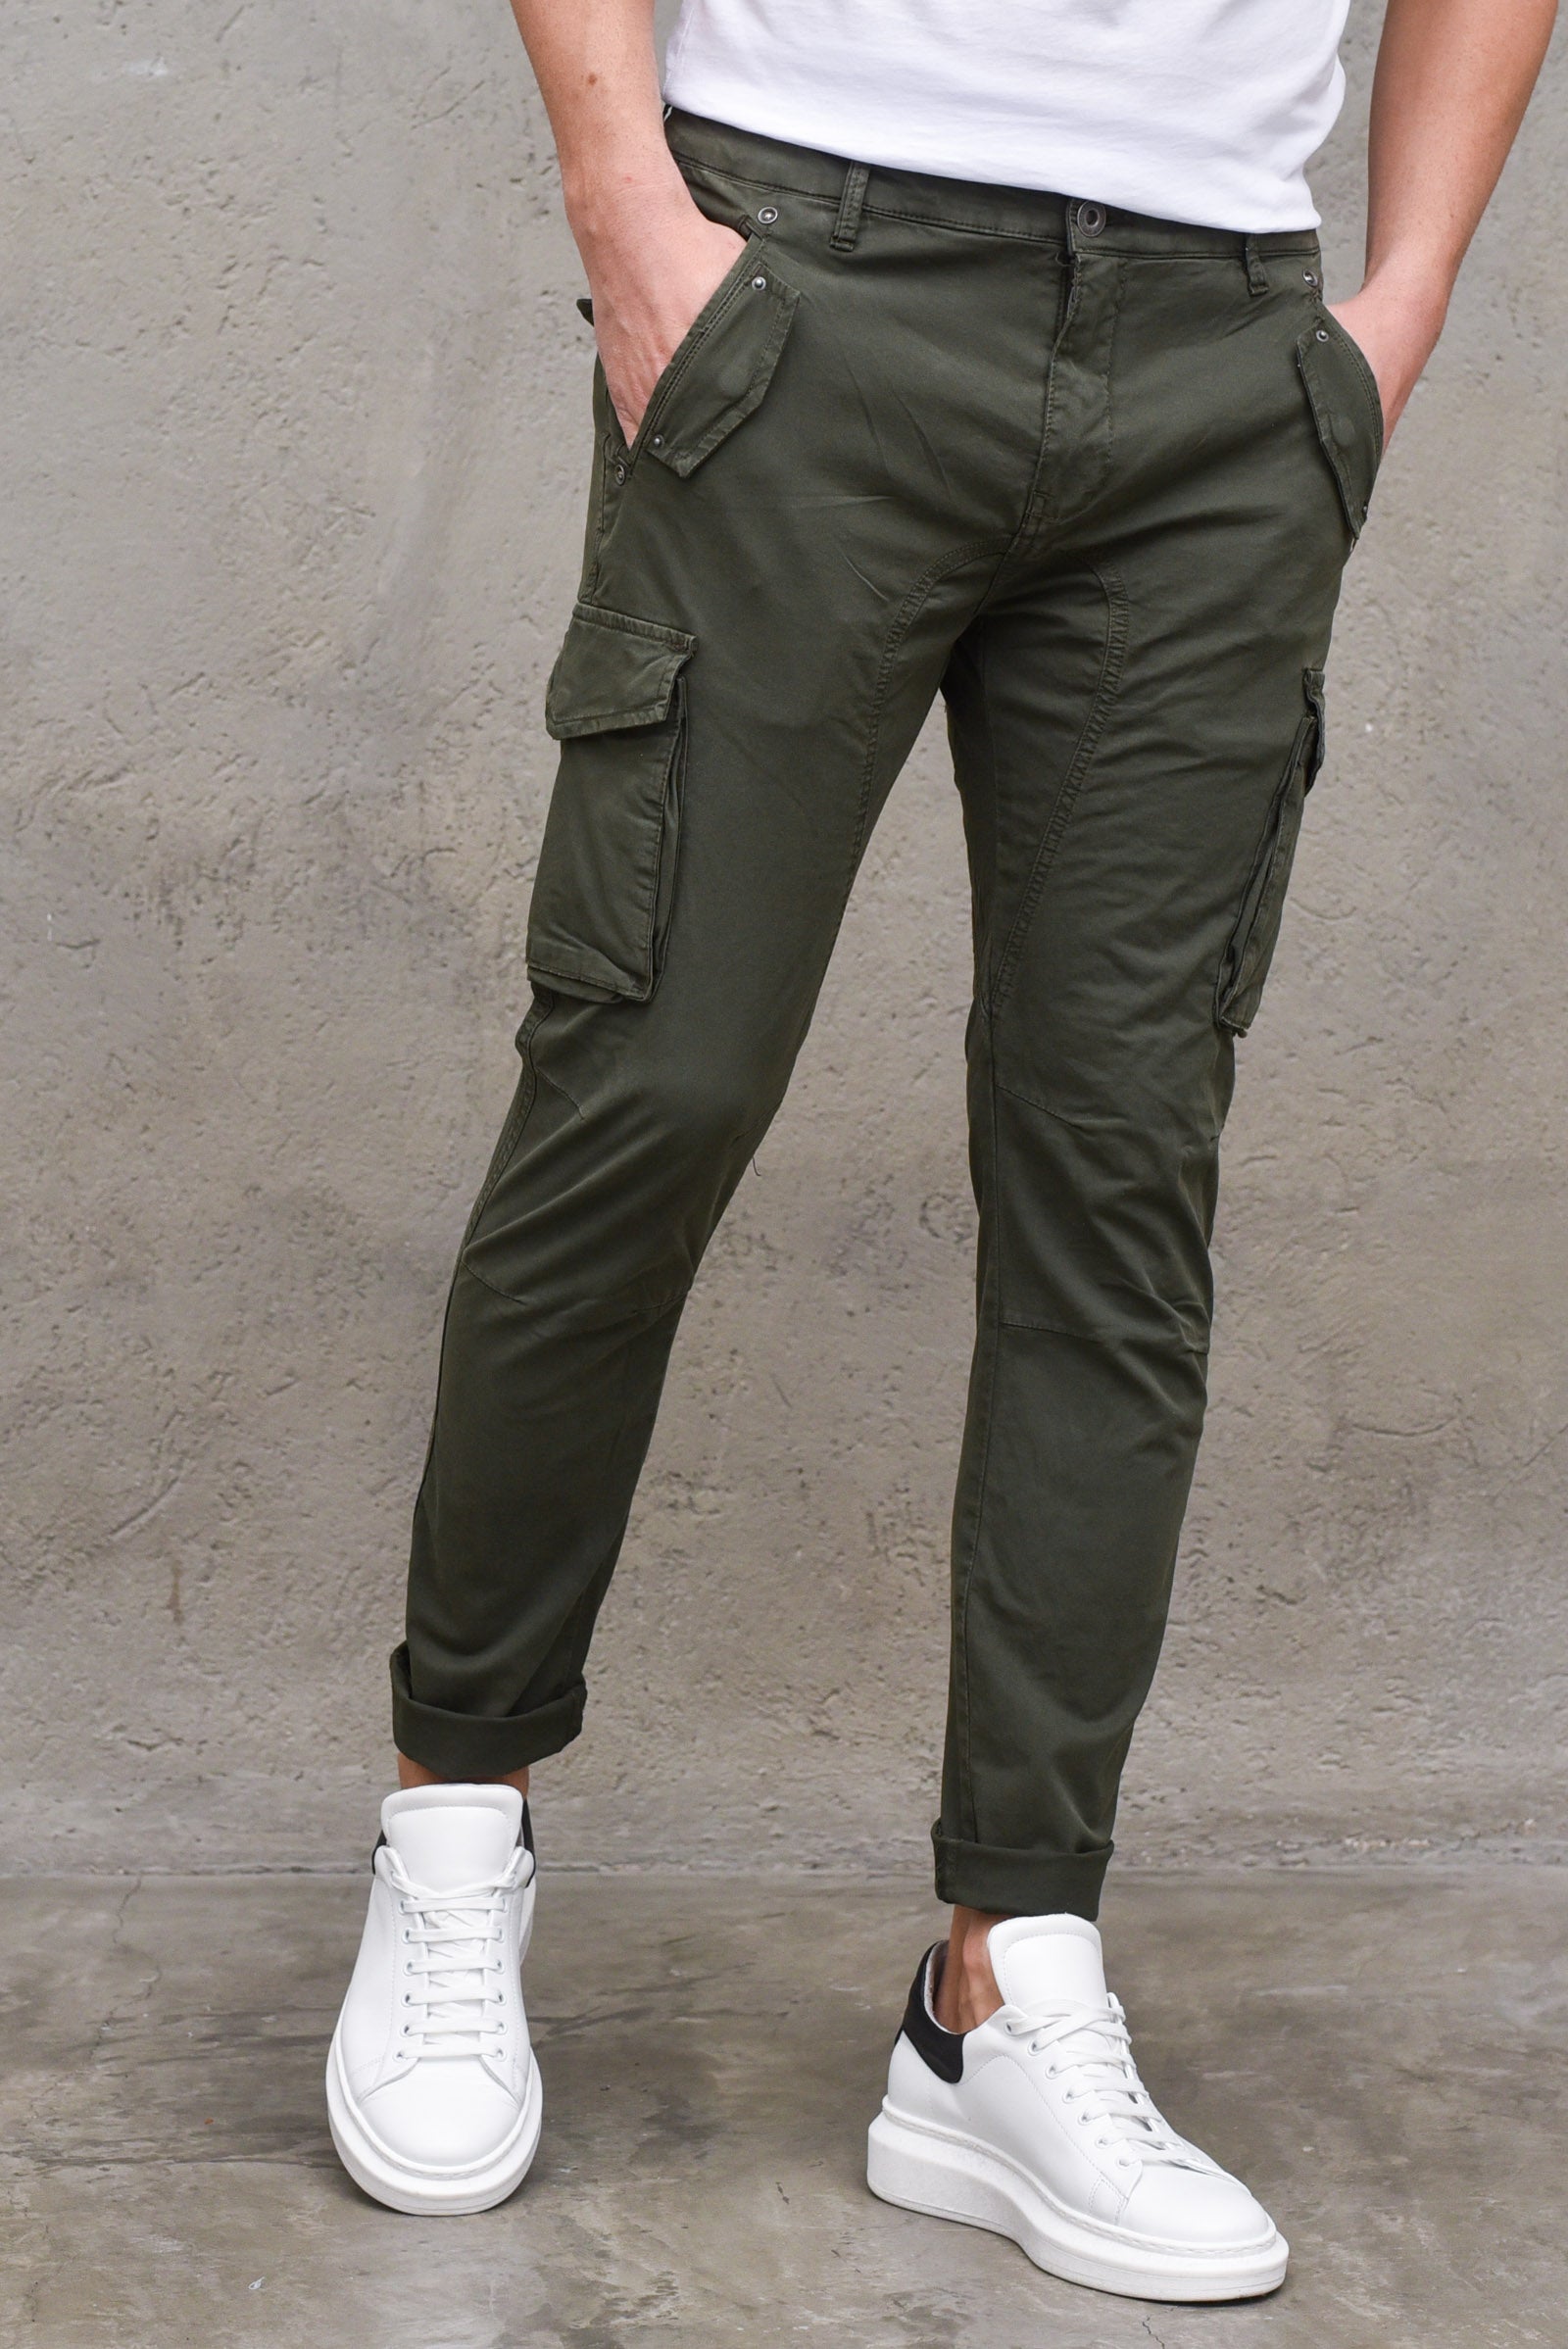 Military  cargo pants for men  green man  - 1